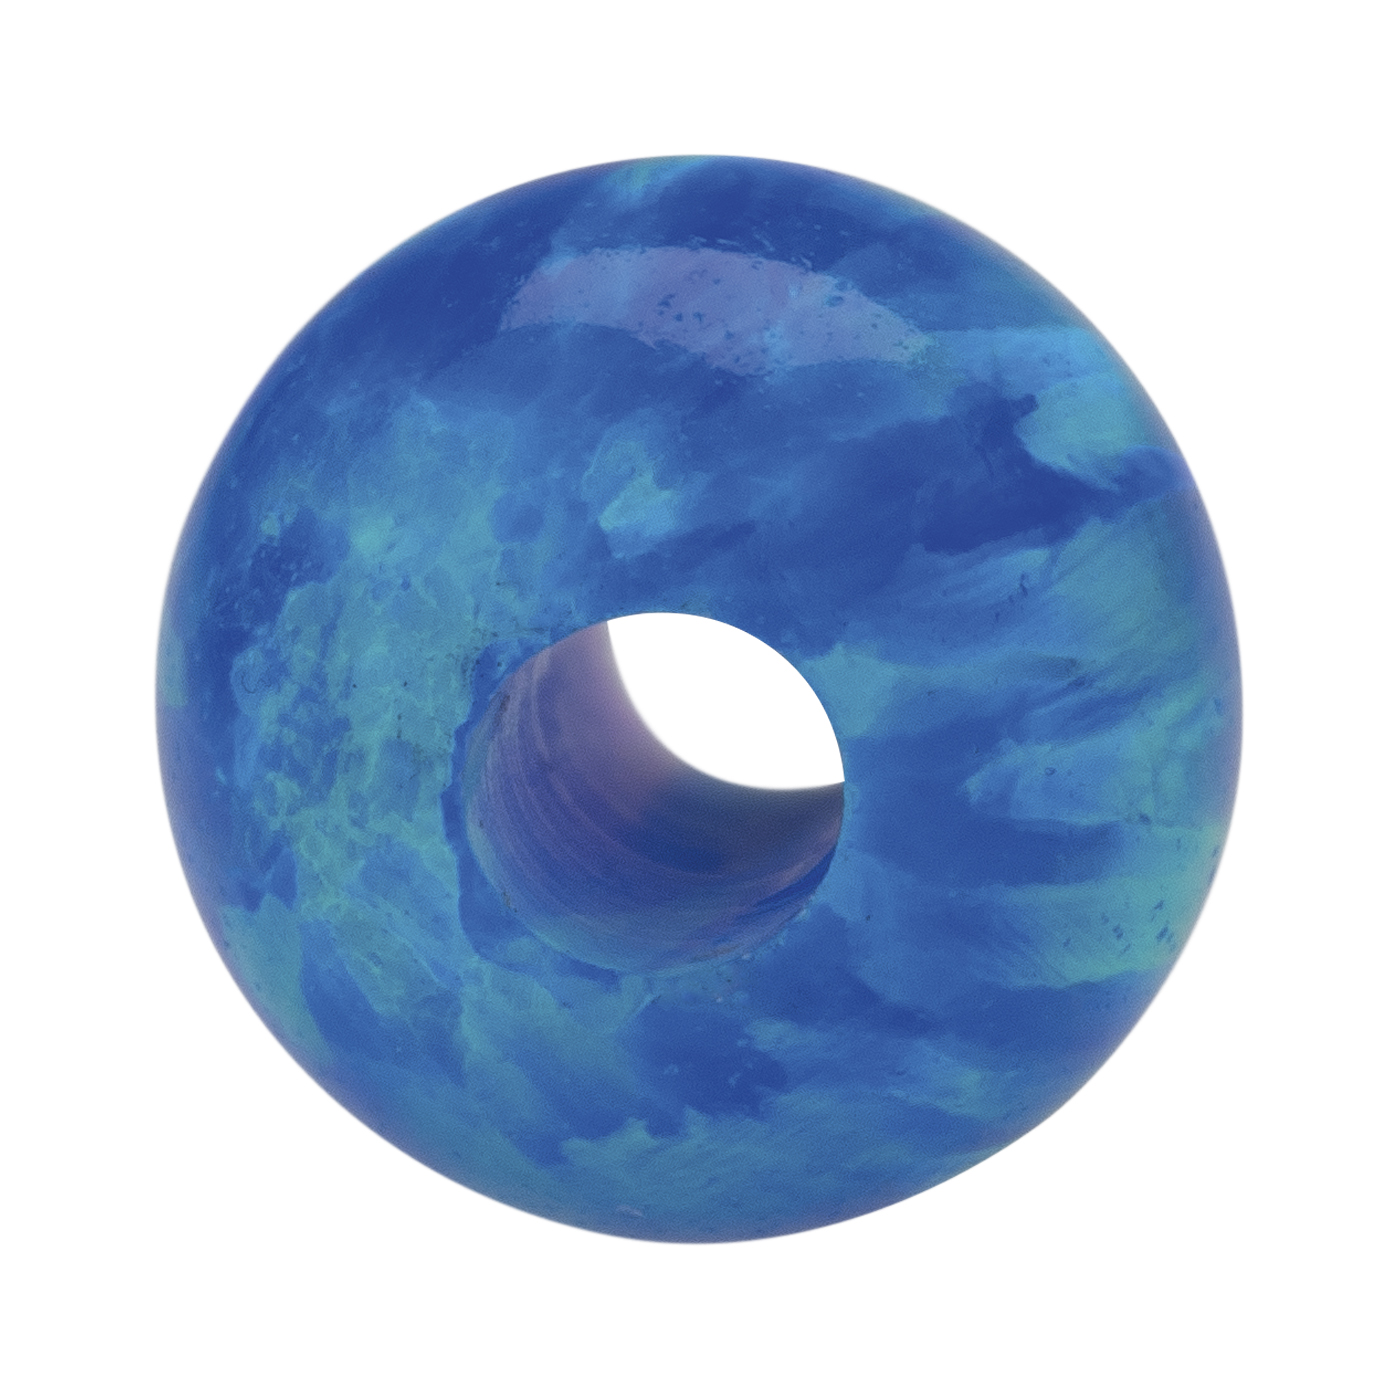 Opal-Imitation, Kugel, blau, ø 10 mm, durchbohrt - 1 Stück